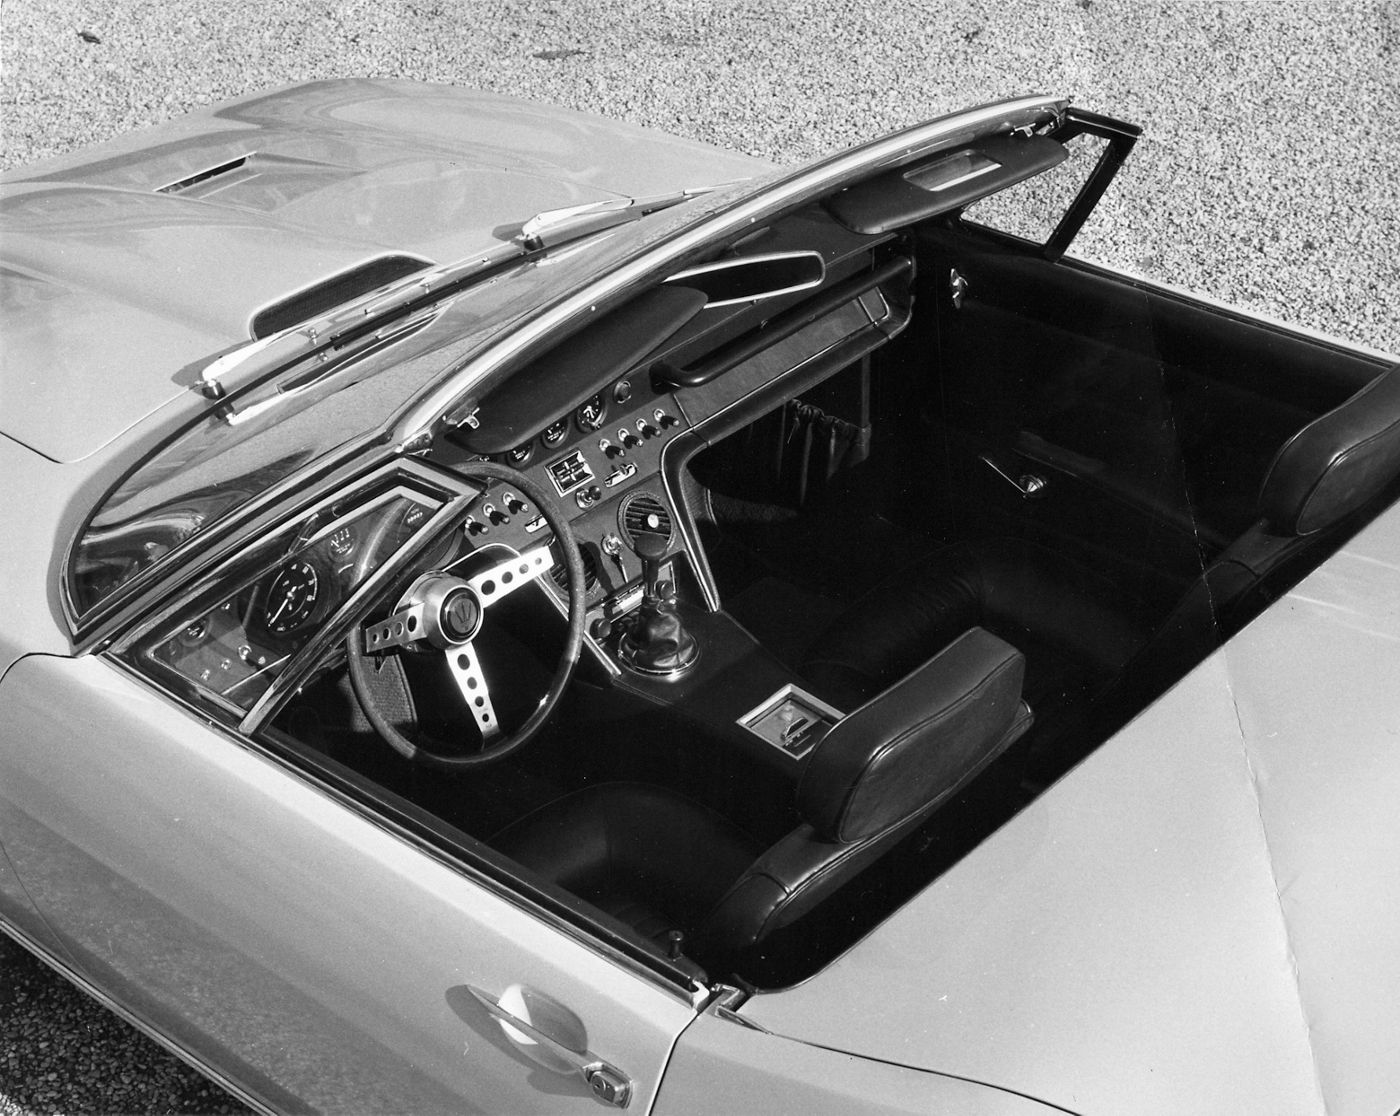 1967 Maserati Ghibli Spyder - the classic two-seater interior